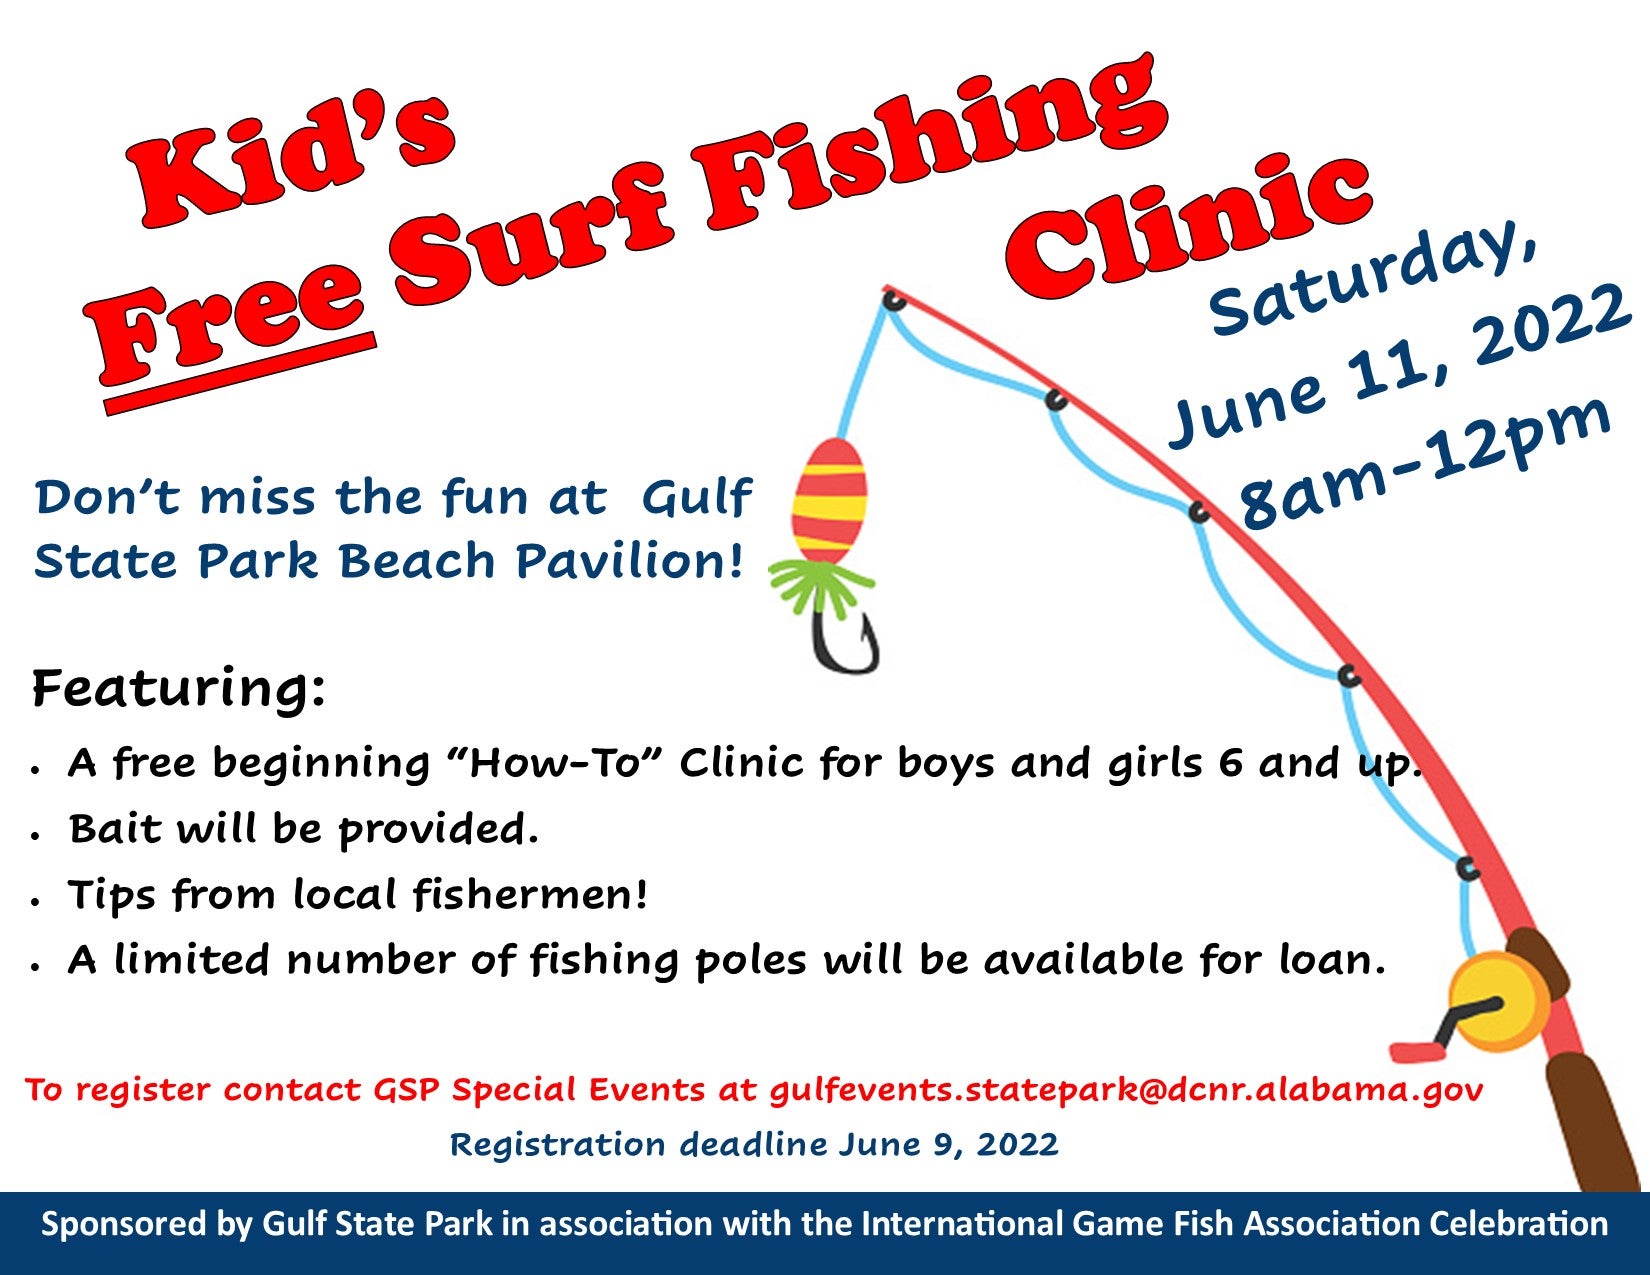 Kid's Free Surf Fishing Clinic 2022